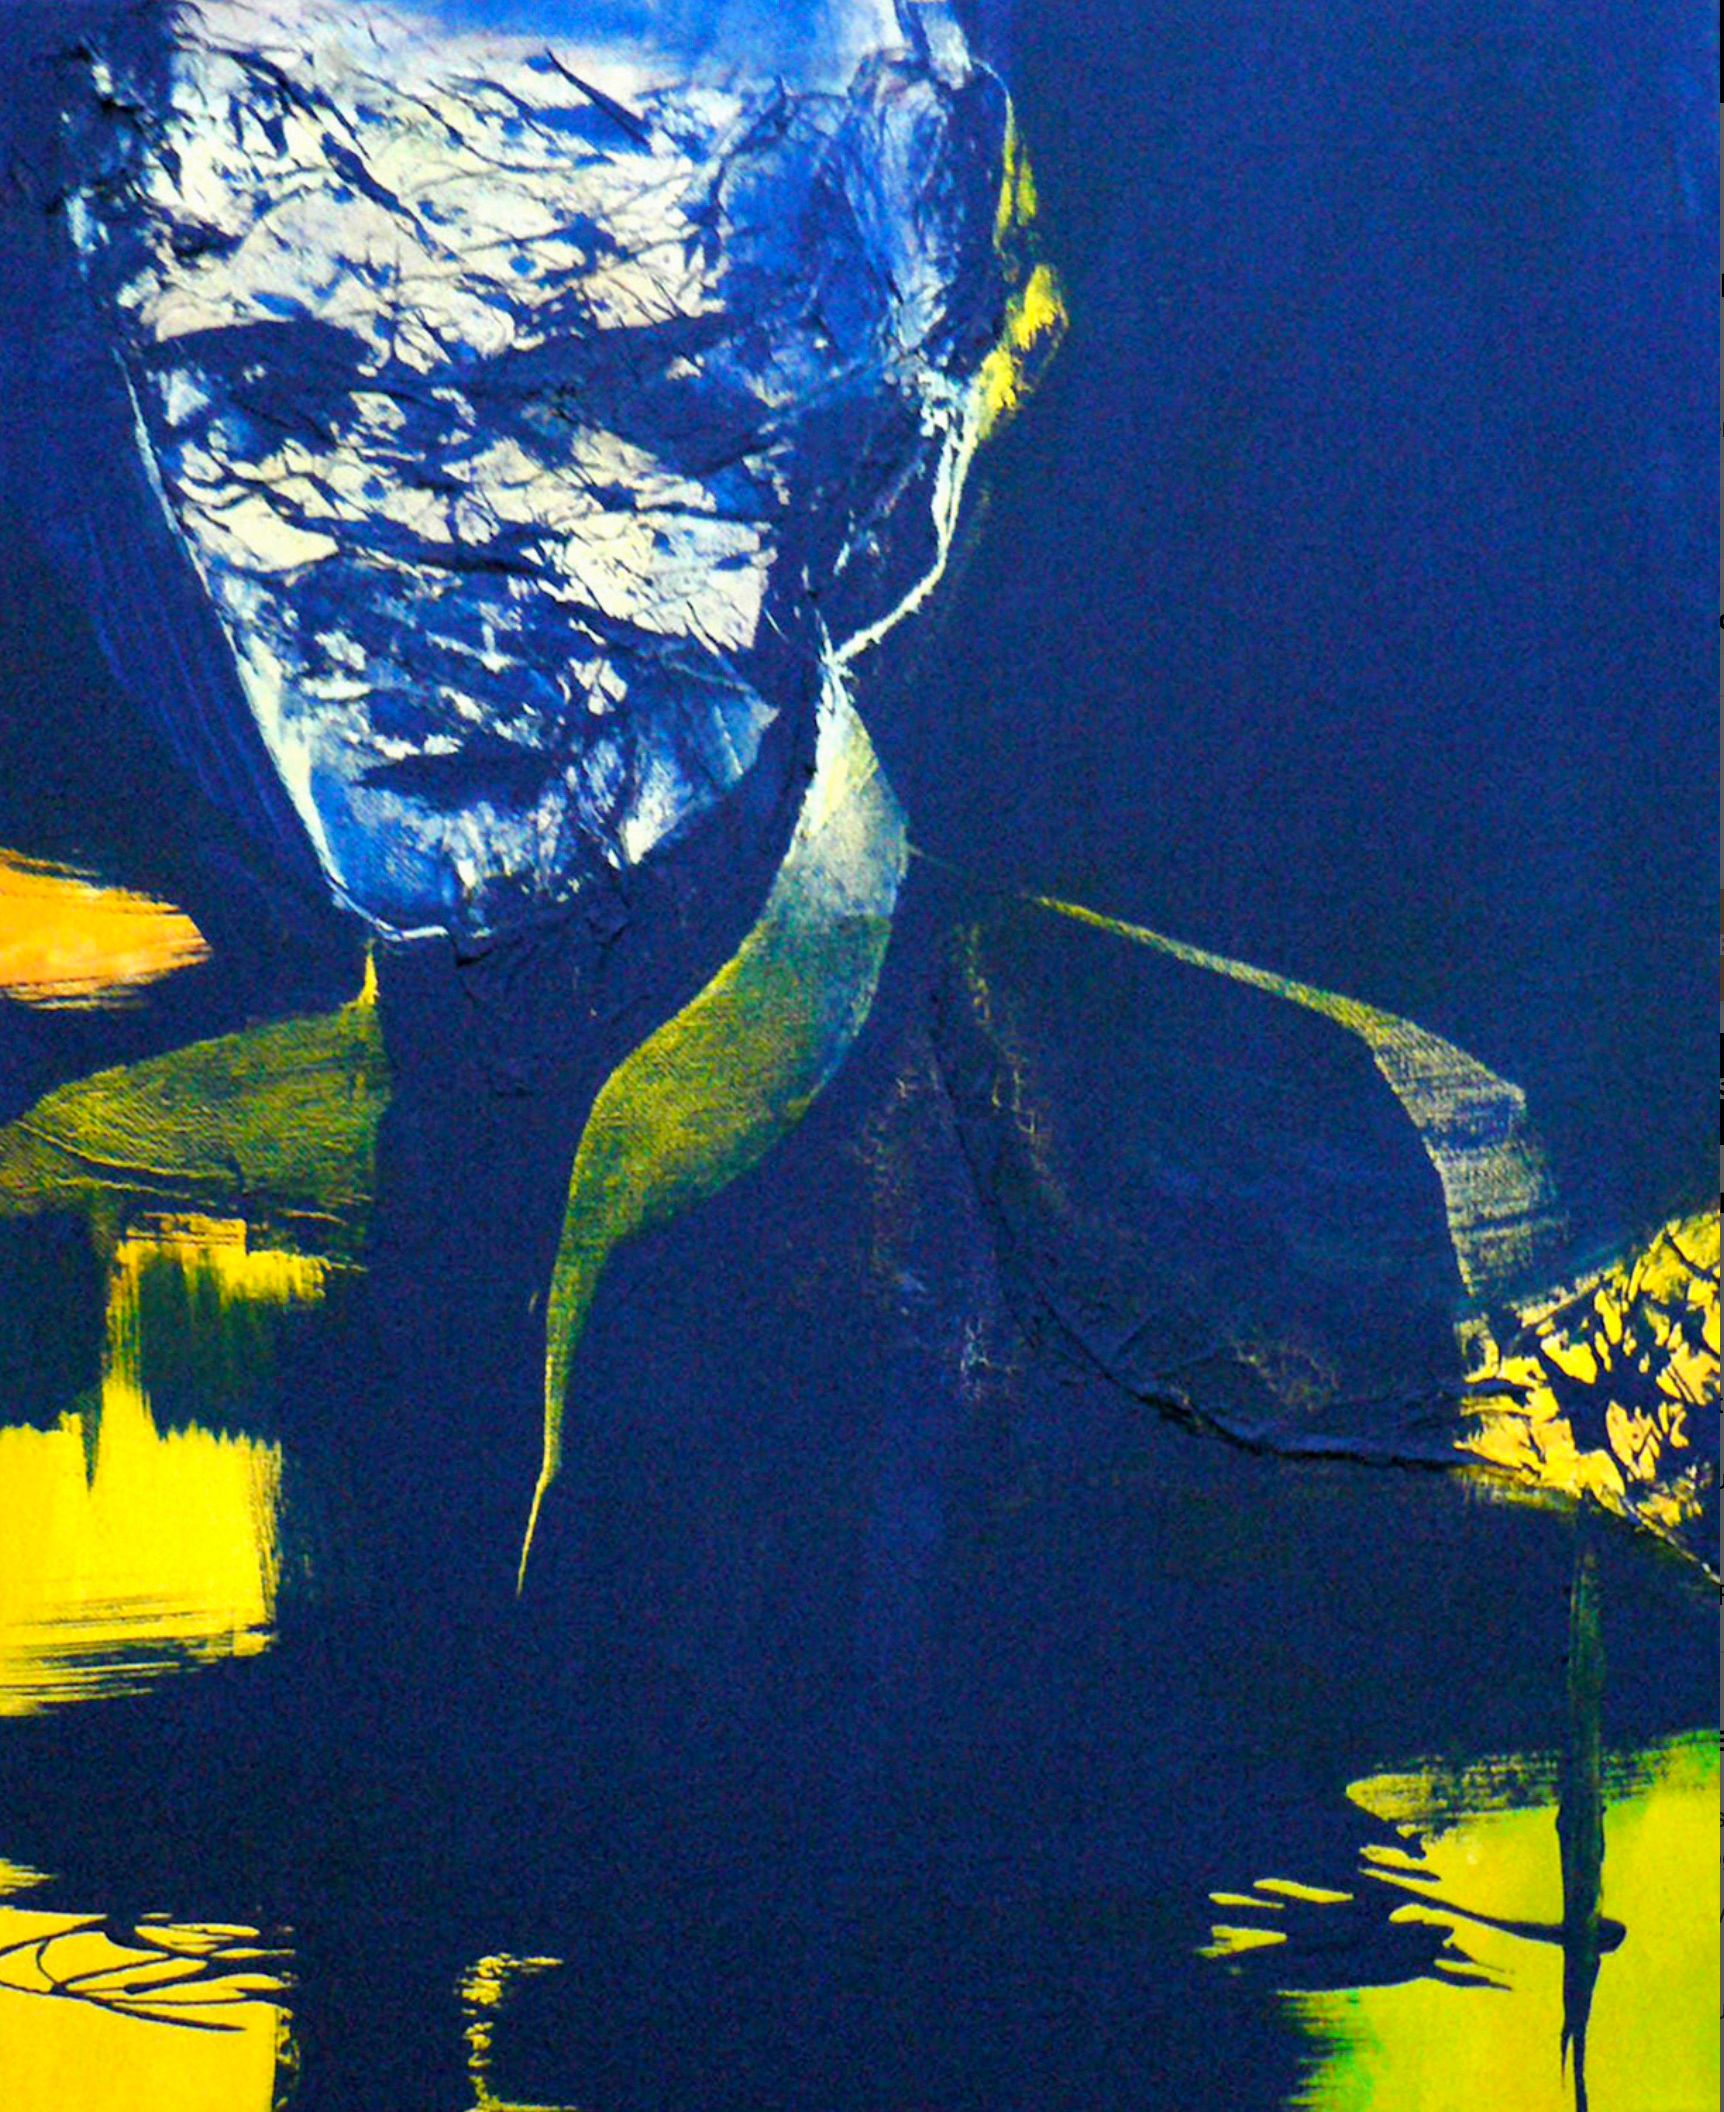 Sylvia Baldeva的 "Apparition "画作展示了一个男人，人物，夜晚，脸，丙烯酸和宣纸在帆布上的肖像拼贴。  颜色主要是蓝色和黄色